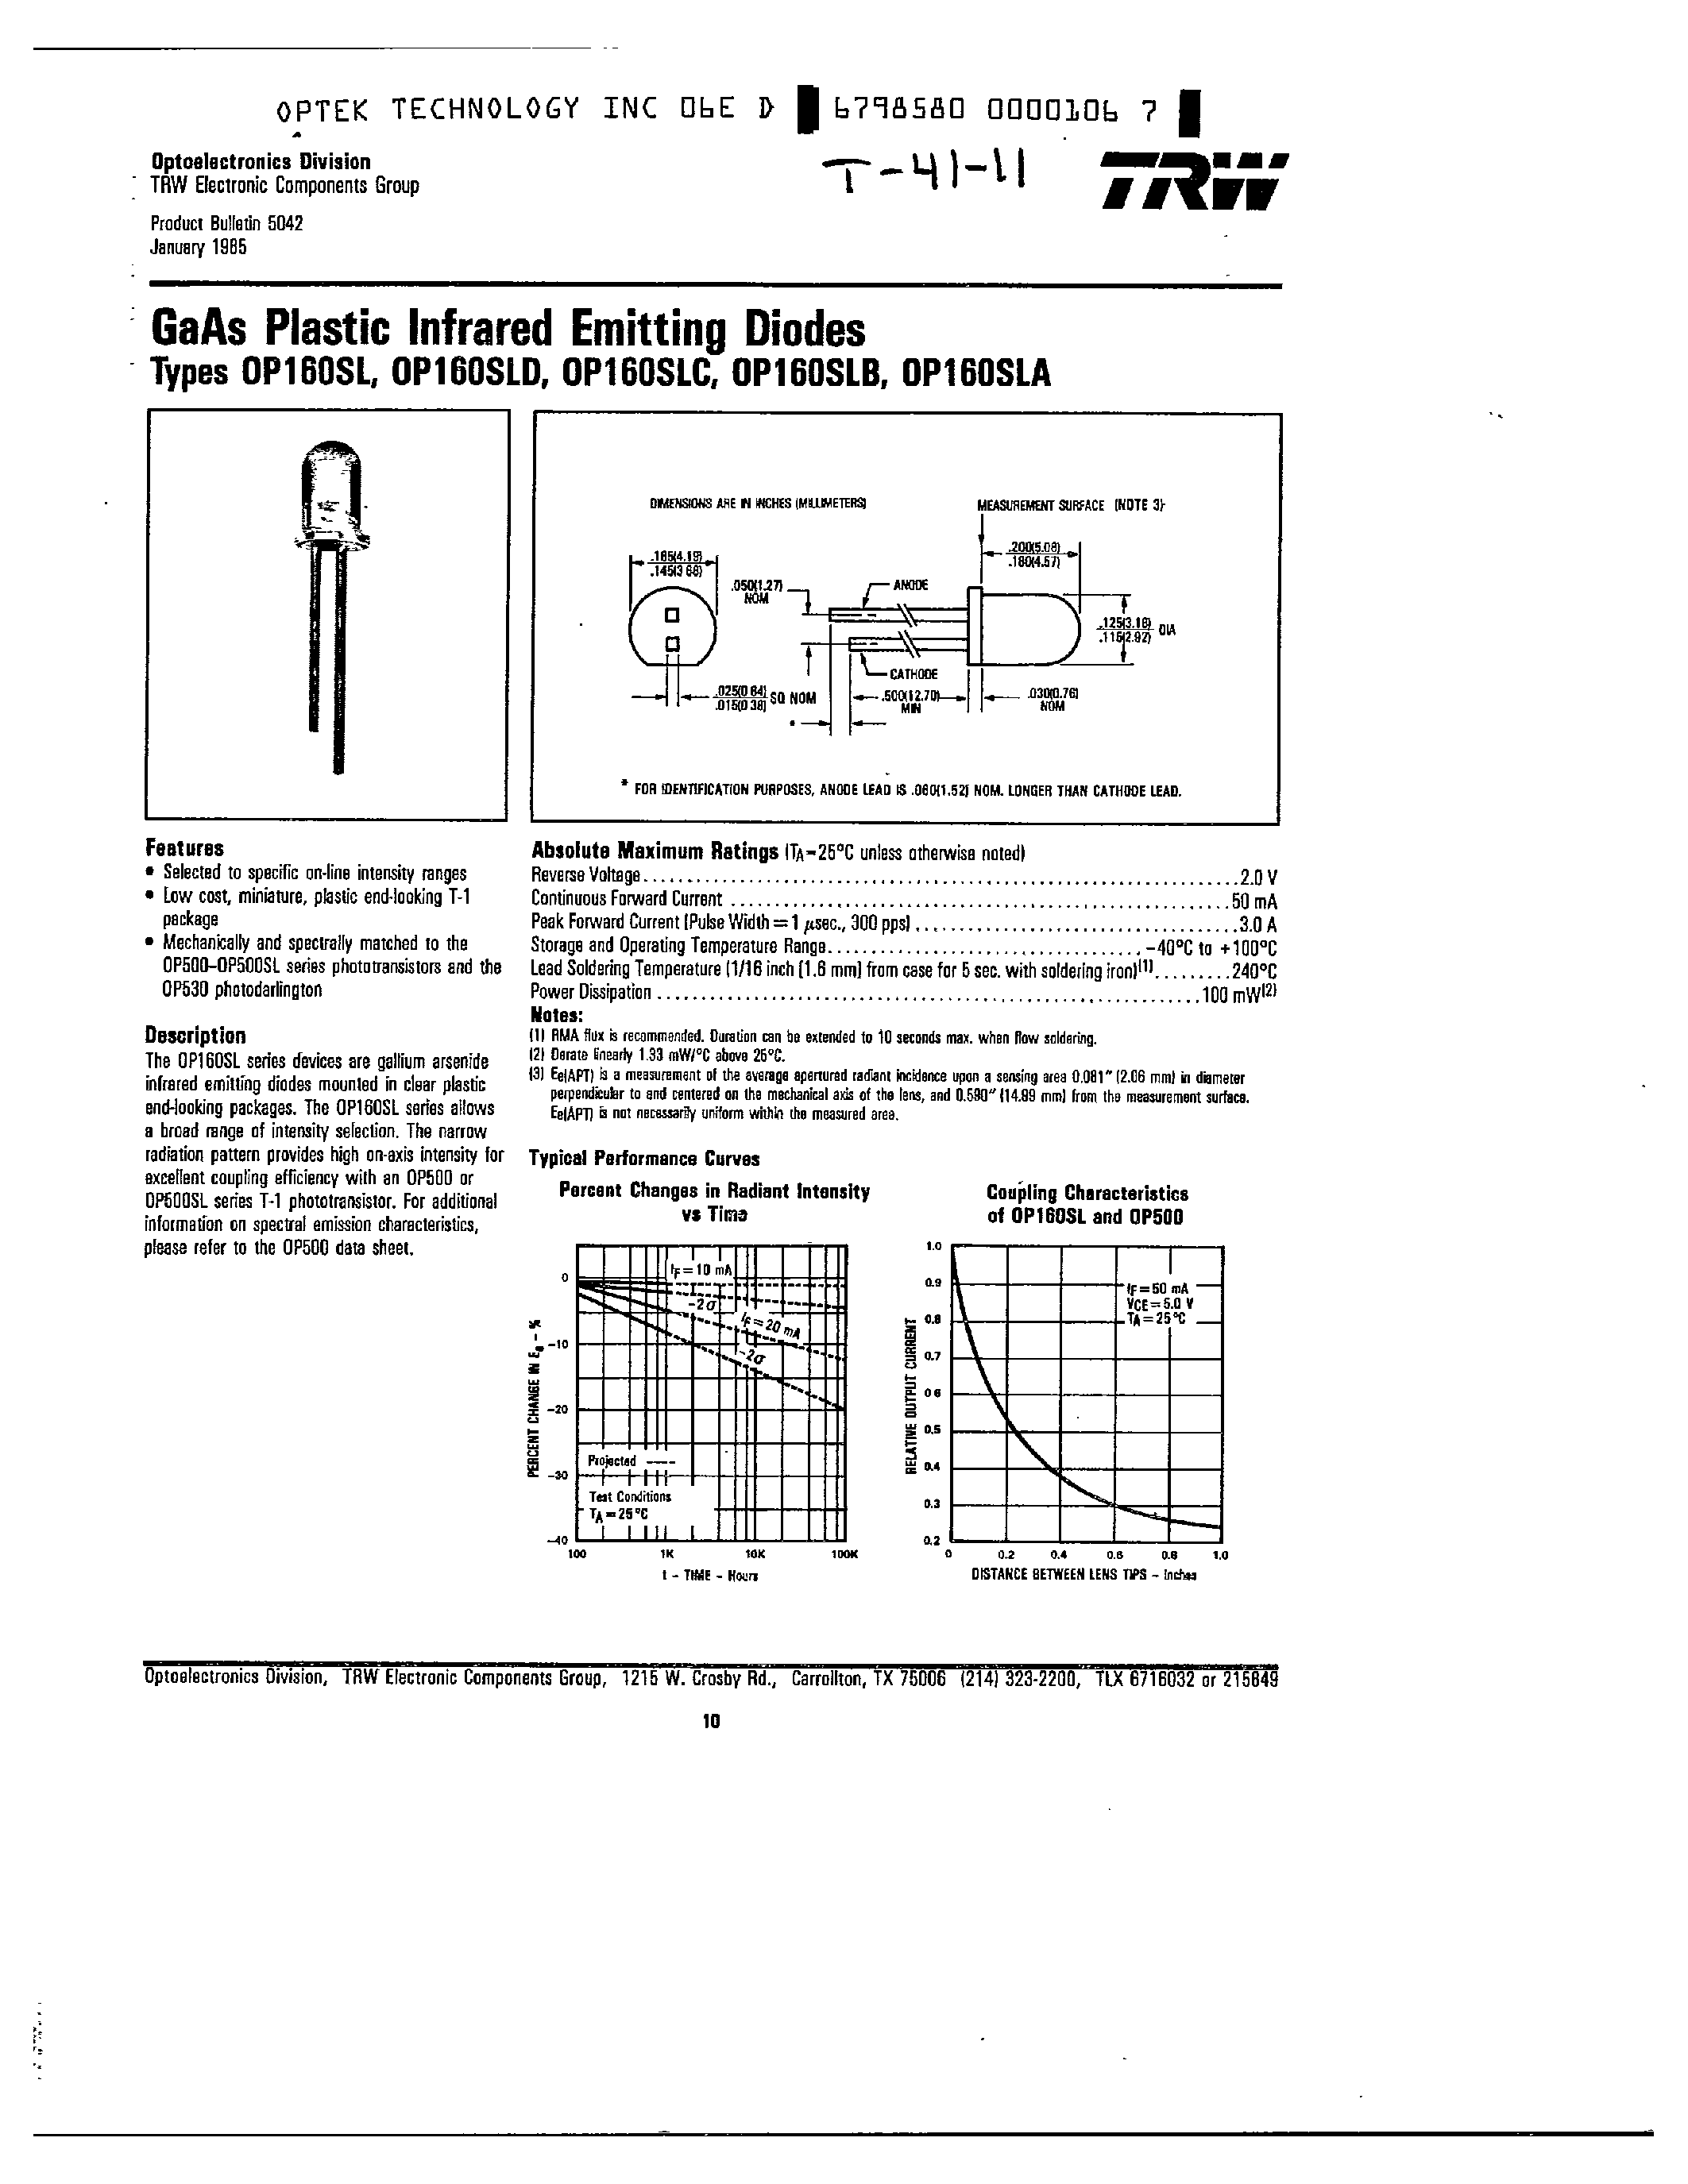 Datasheet OP160SLD - GAAS PLASTIC INFRARED EMITTING DIODES page 1